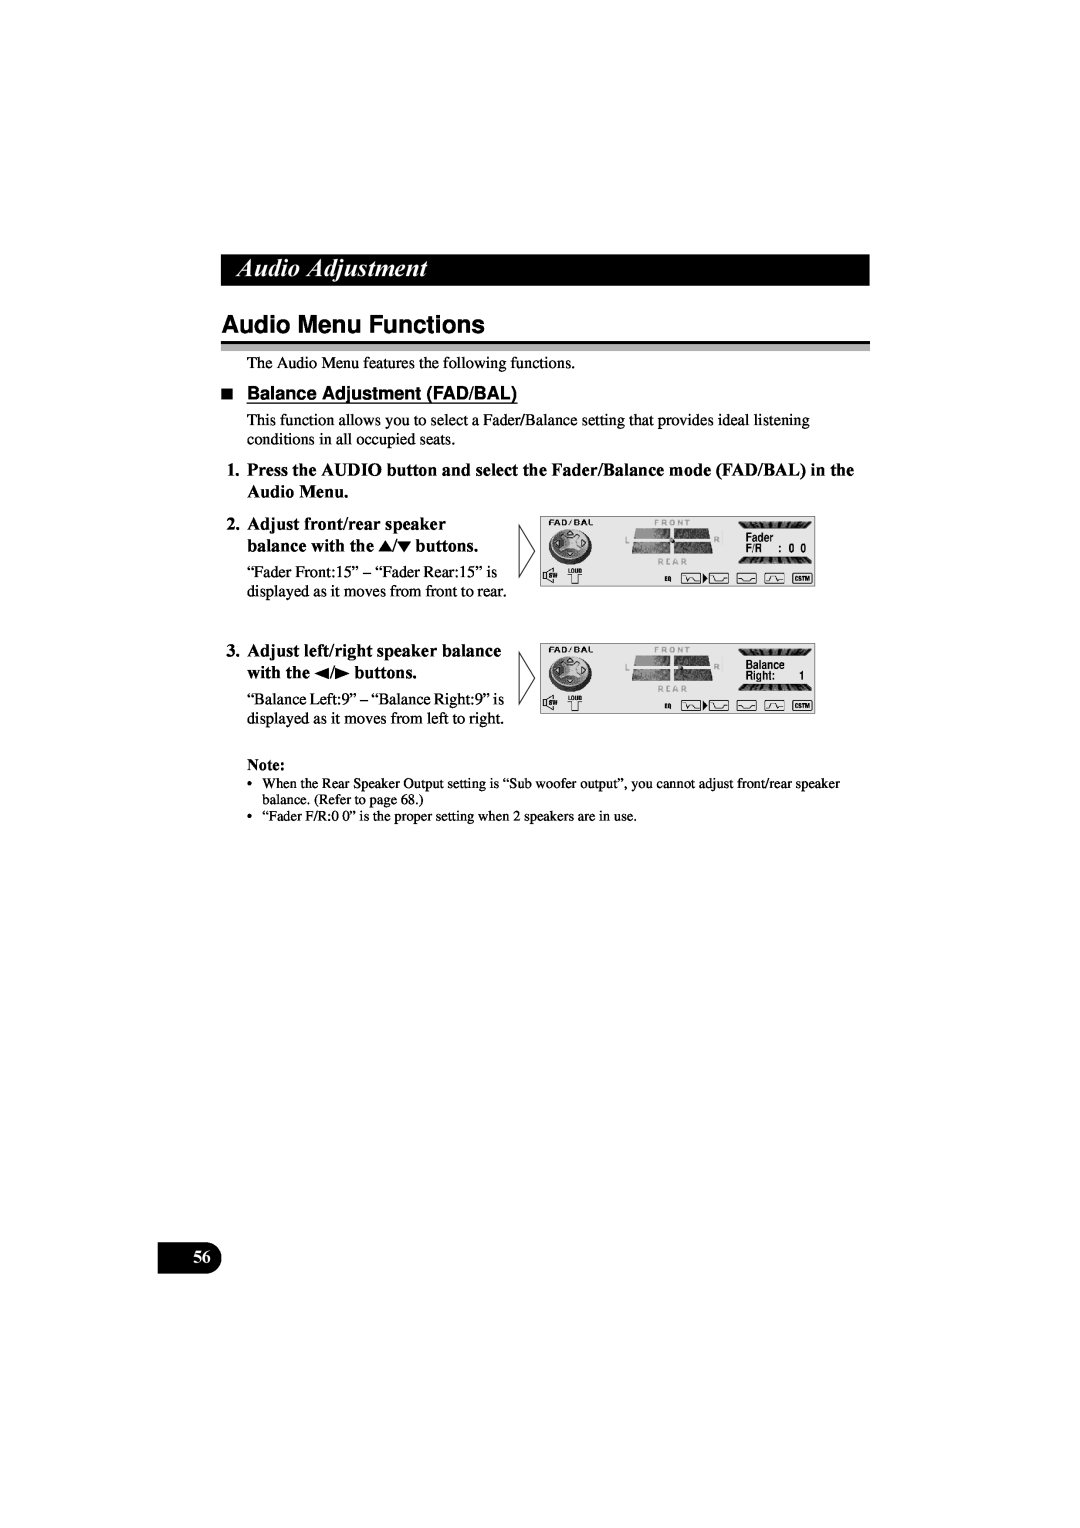 Pioneer DEH-P8100R manual Audio Menu Functions, Balance Adjustment FAD/BAL, $Xglr$Gmxvwphqw 